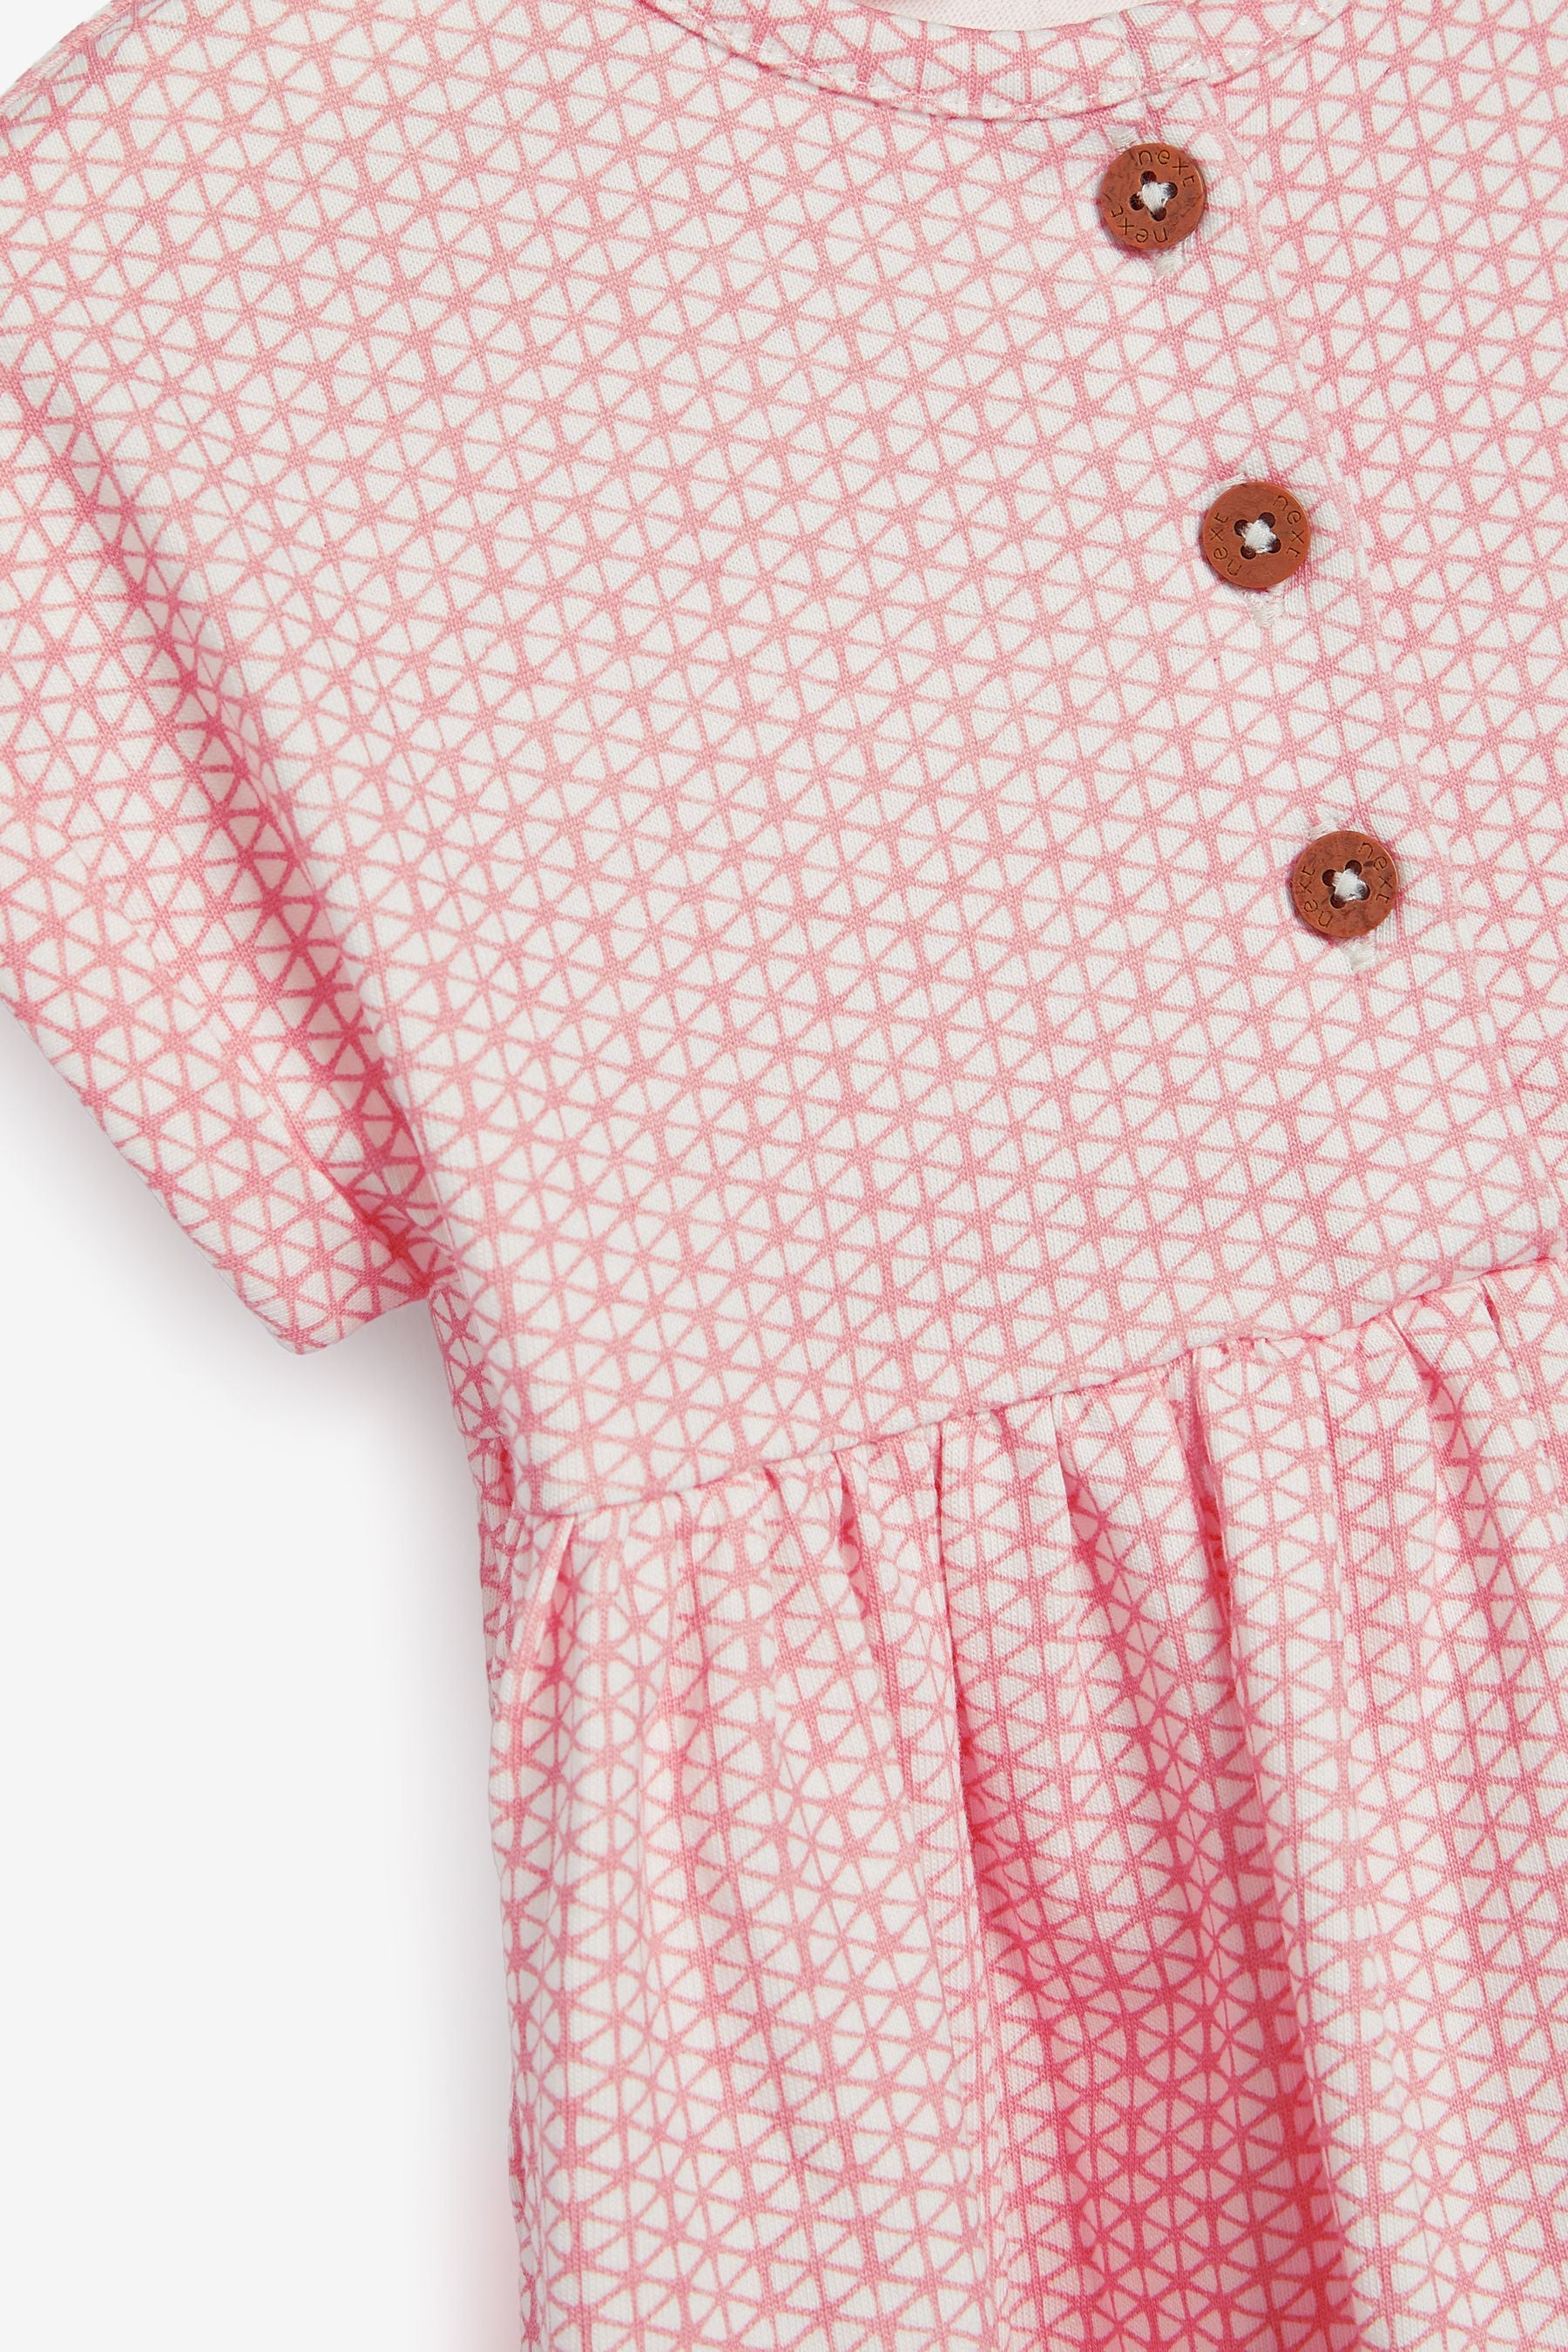 Pink Baby Geometric Print Dress (0mths-2yrs)